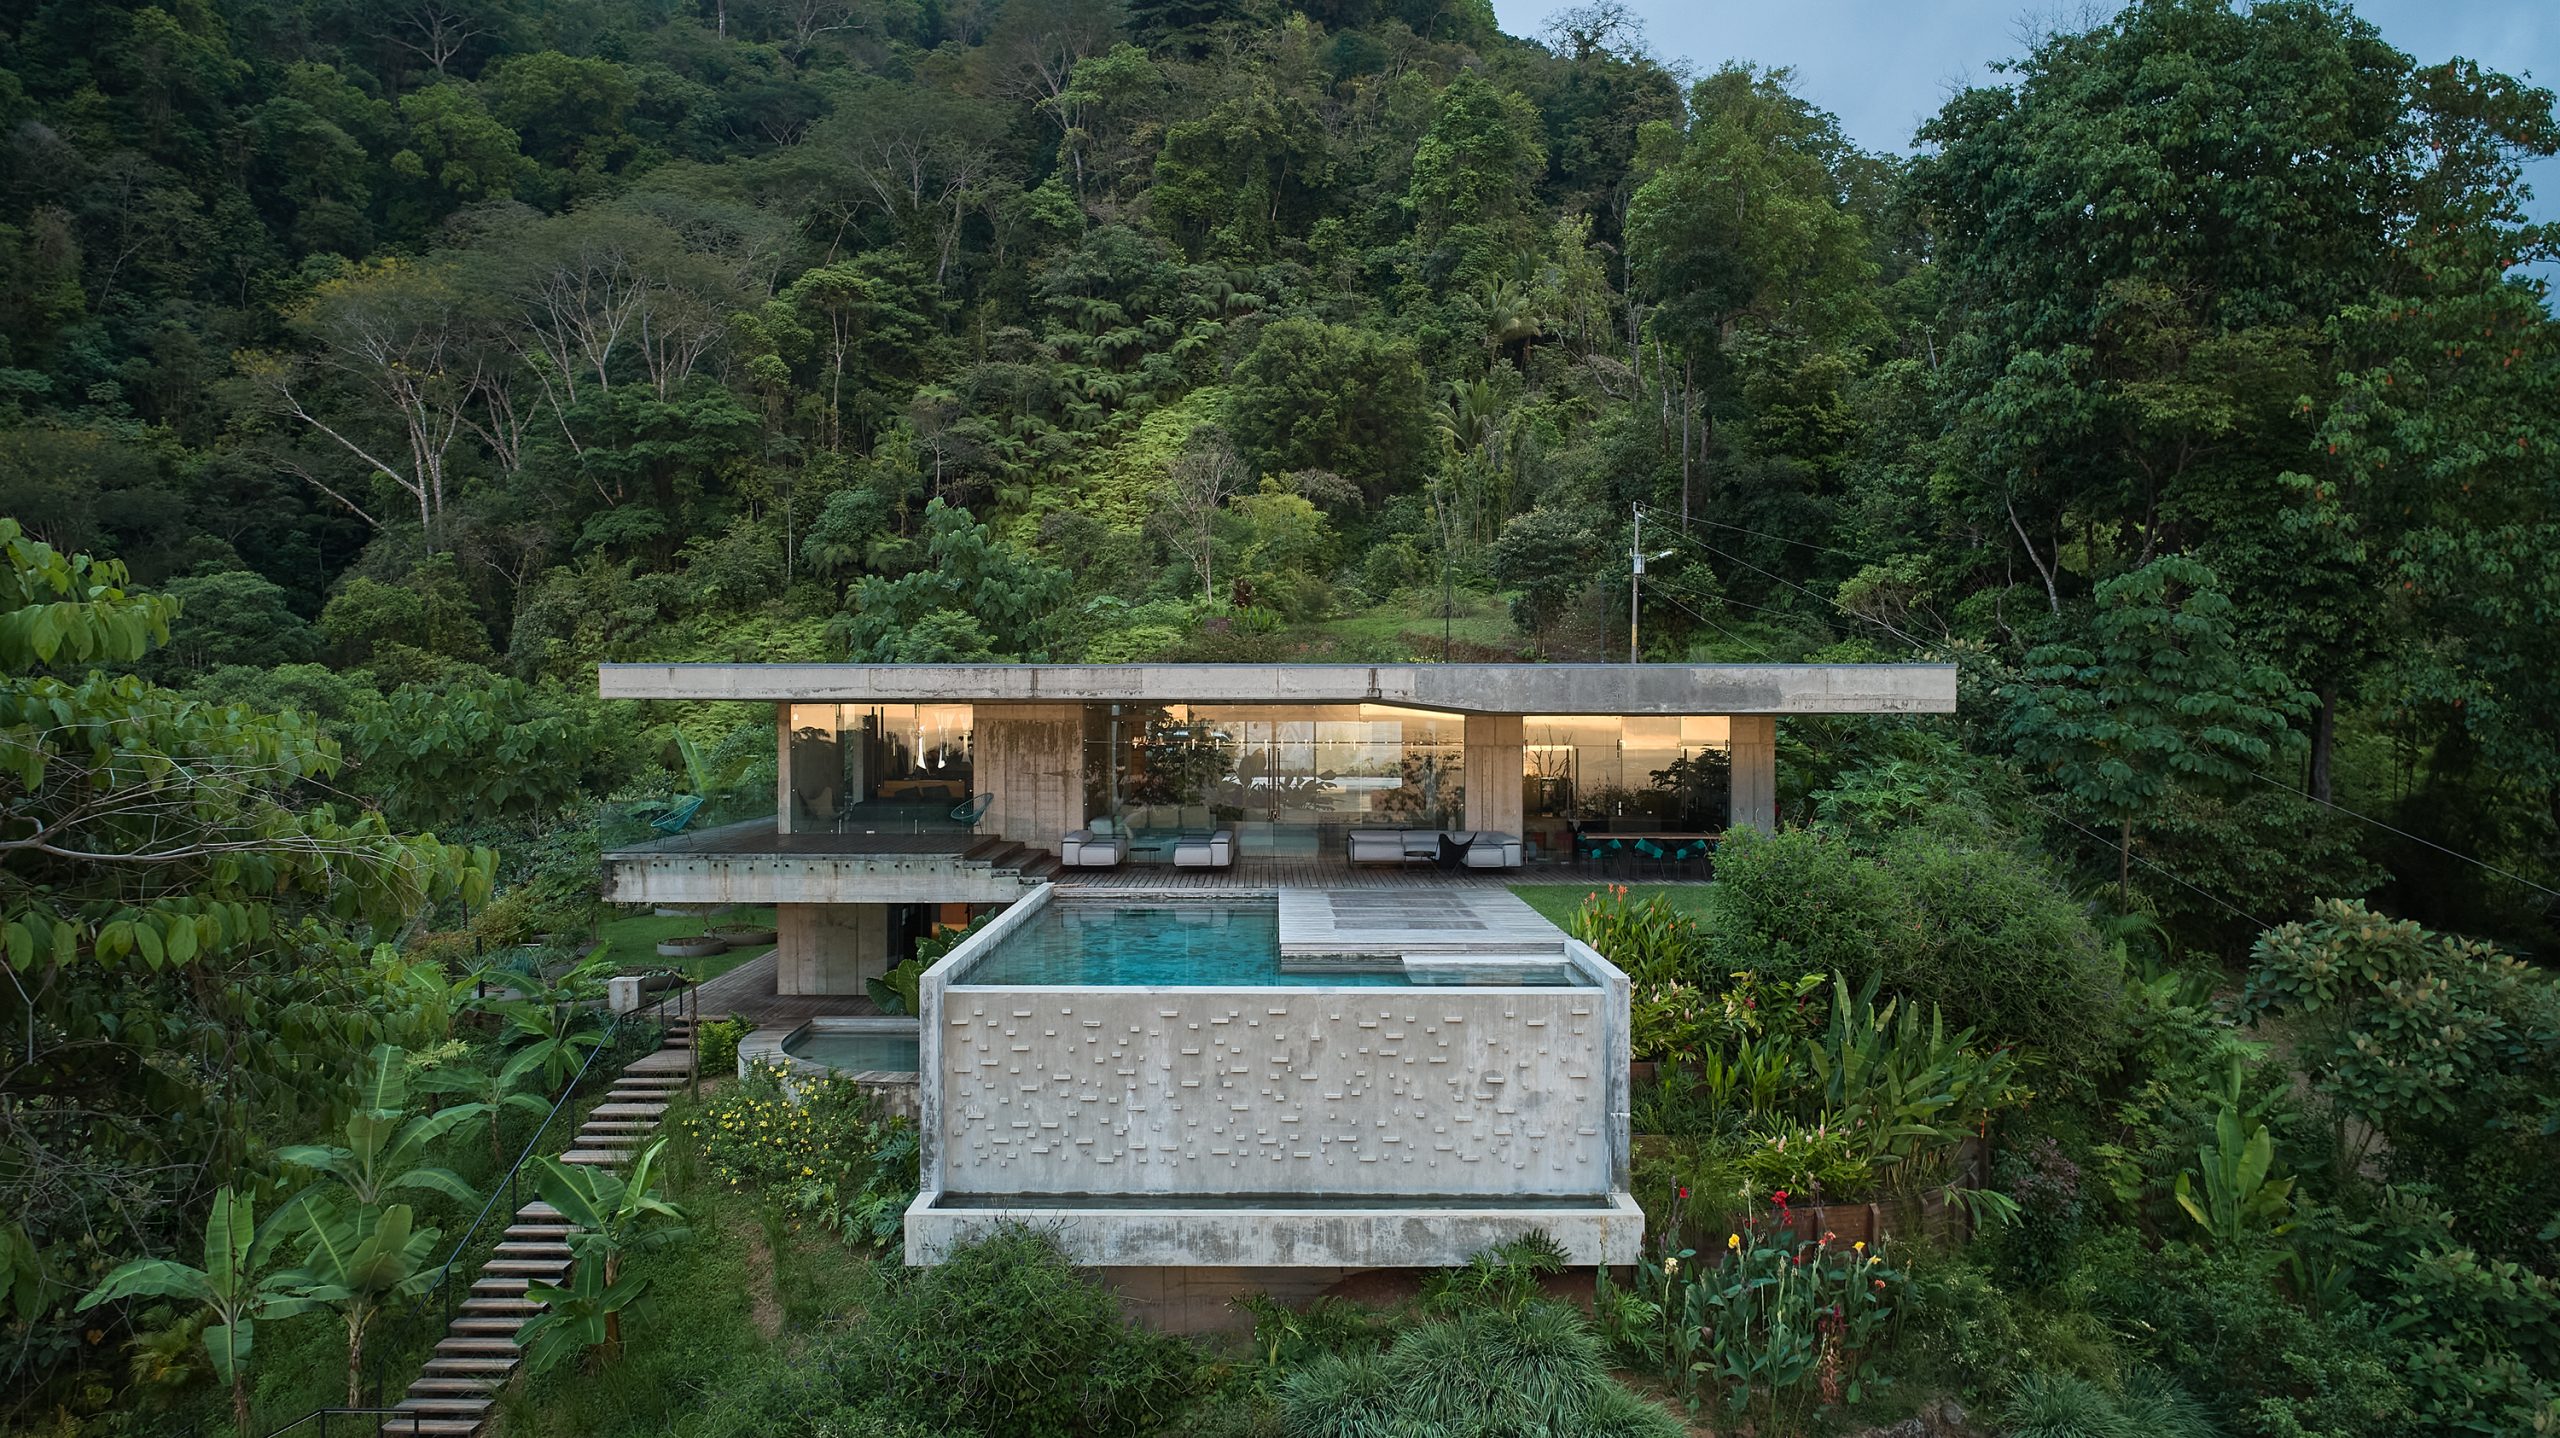 Art Villas: The Most Rock-Star Residence In Costa Rica?